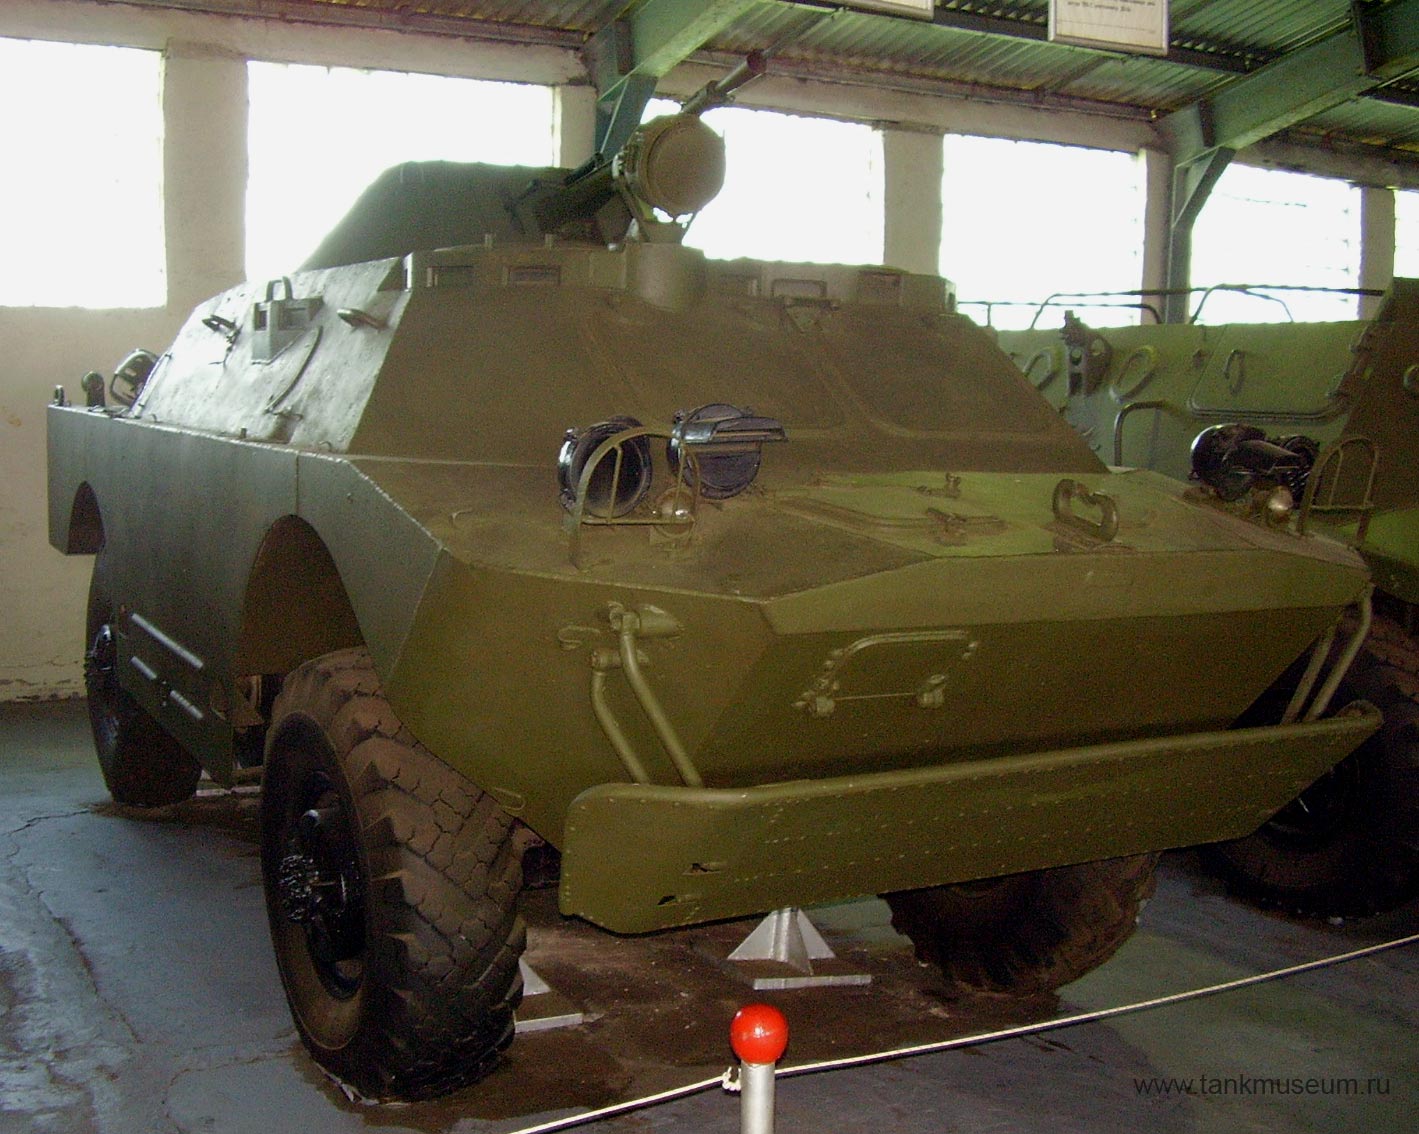 Kubinka tank museum Floating armored reconnaissance patrol vehicle BRDM-2